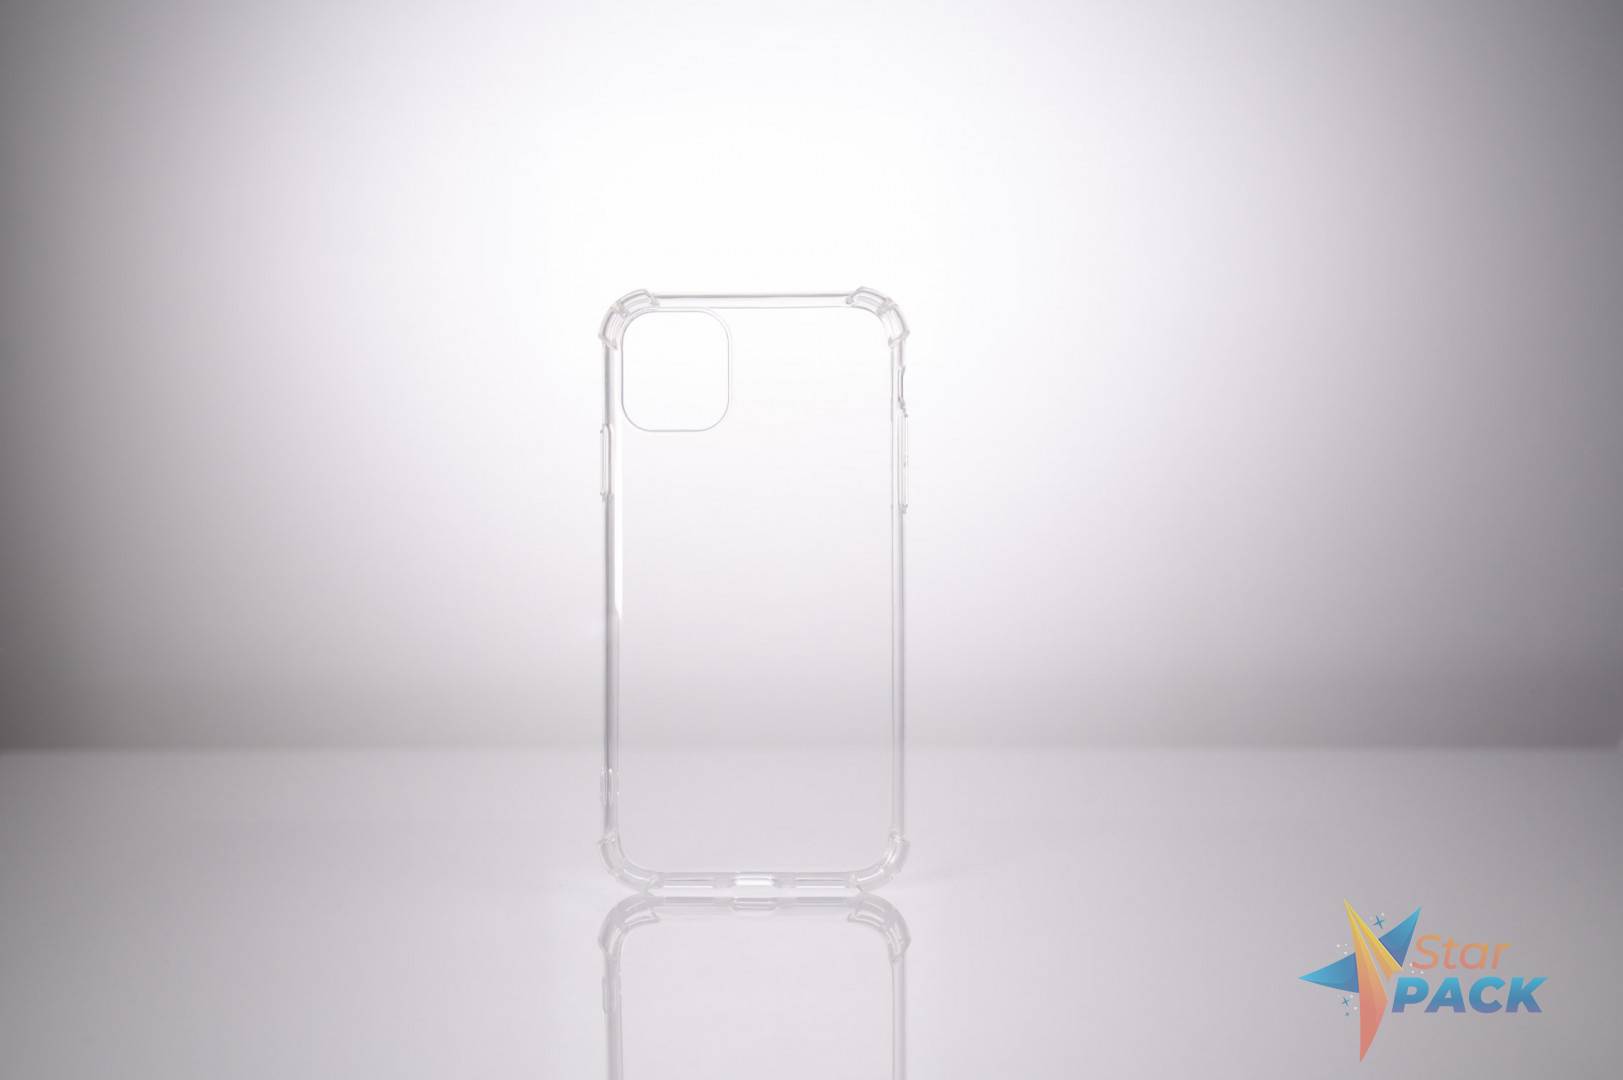 Husa Iphone 11 Spacer, grosime 1.5mm, protectie suplimentara antisoc la colturi, material flexibil TPU, transparenta